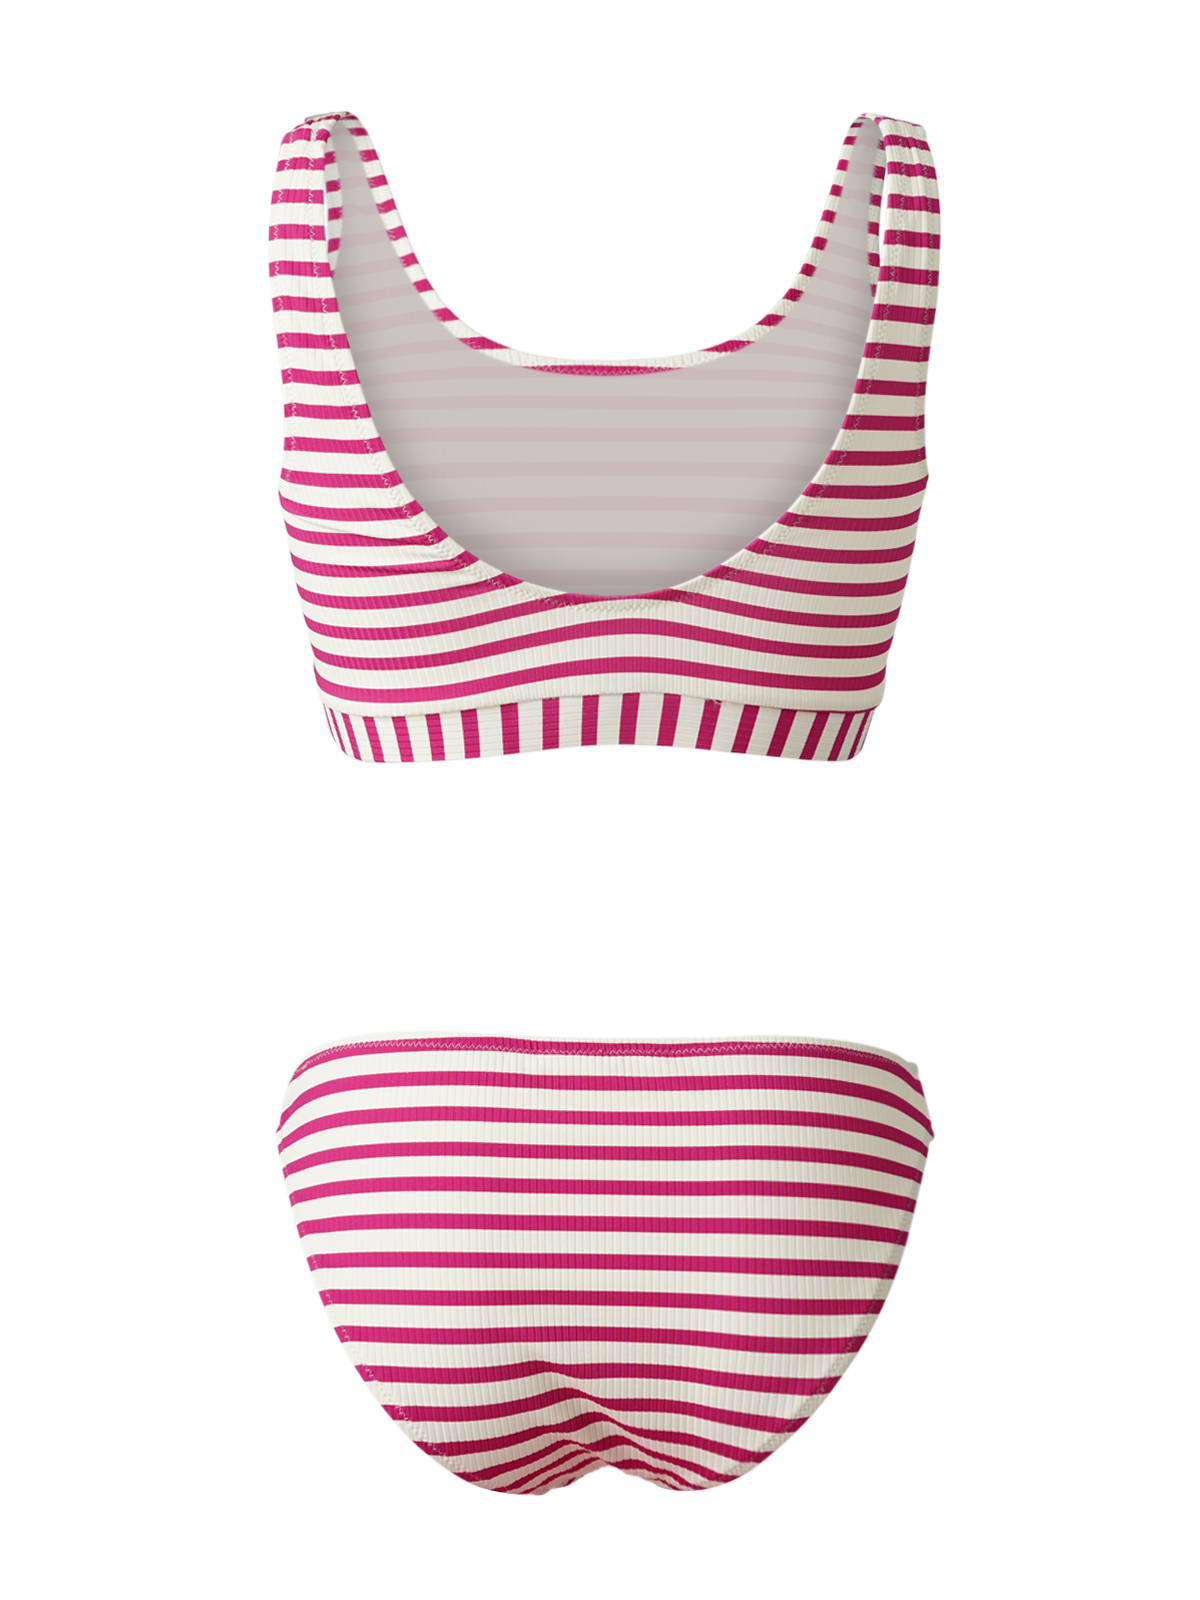 Isabelle-YD Damen Sports Bikini Set | Pink